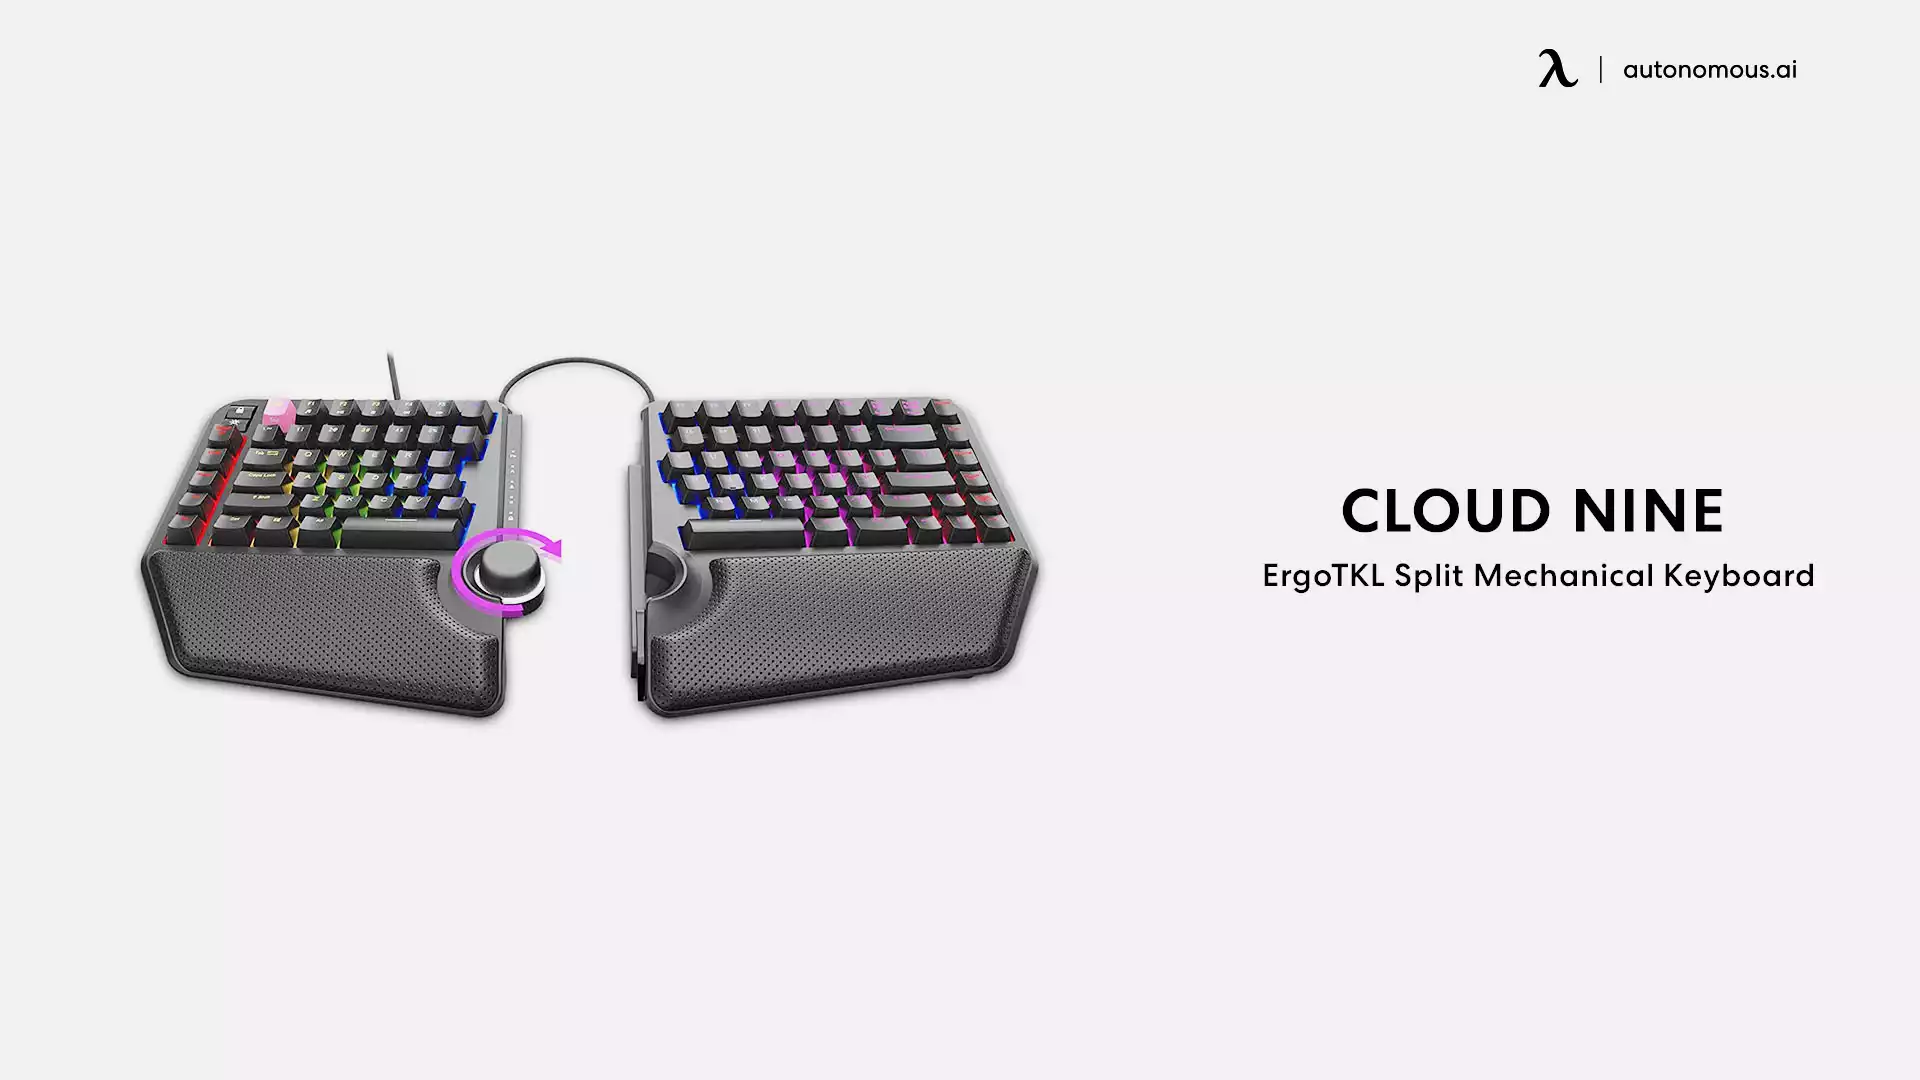 Cloud Nine's ErgoTKL Split Mechanical Keyboard